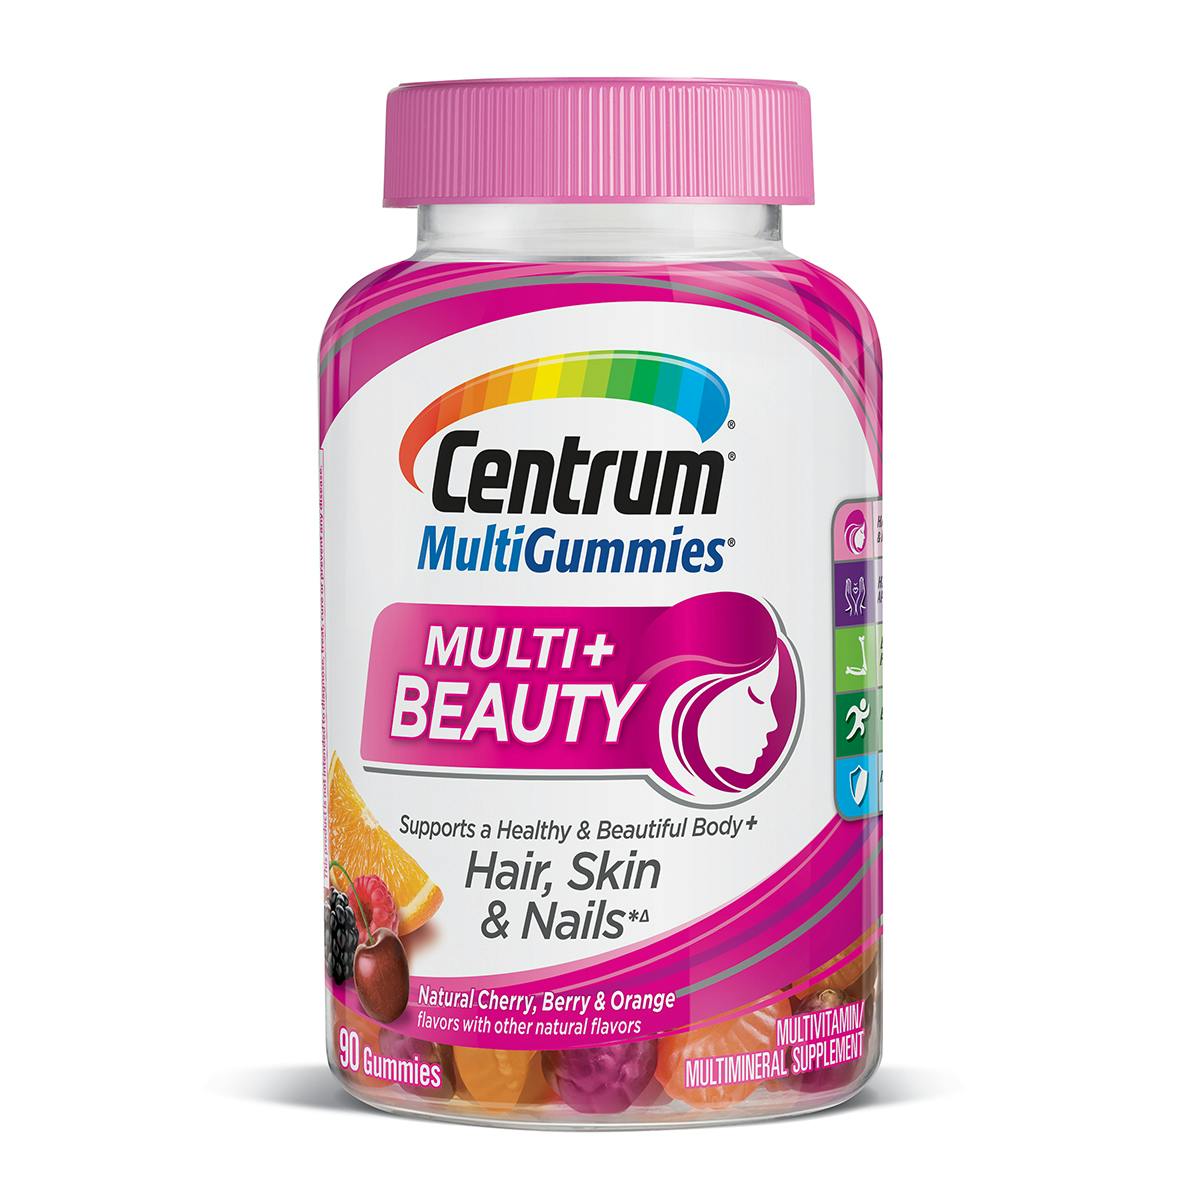 Bottle of Centrum MultiGummies Multi plus Beauty multivitamins